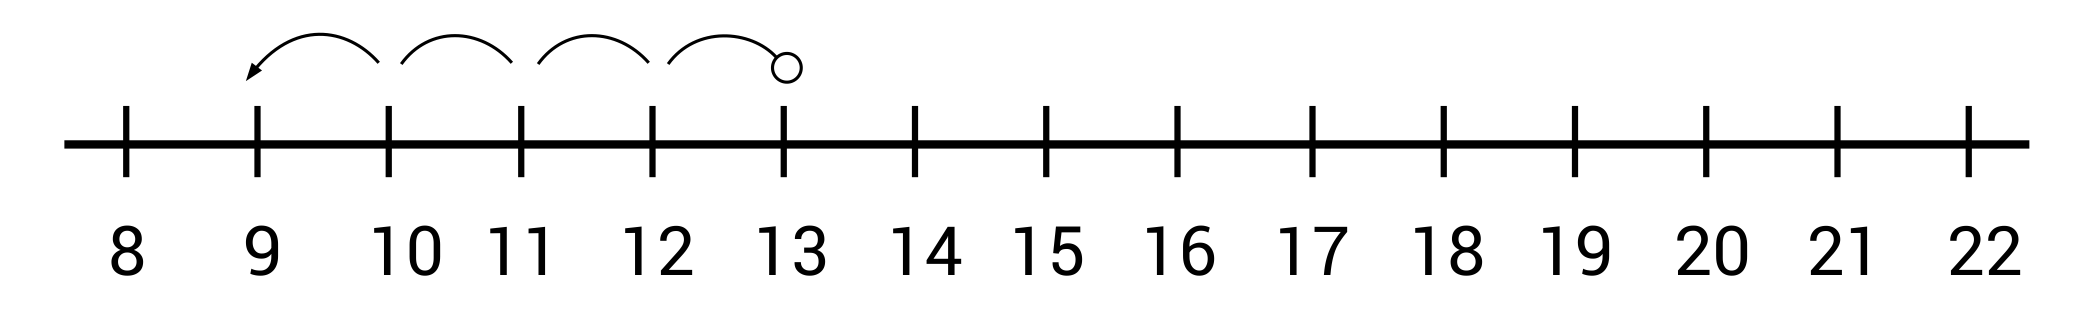 8 through 22 number line